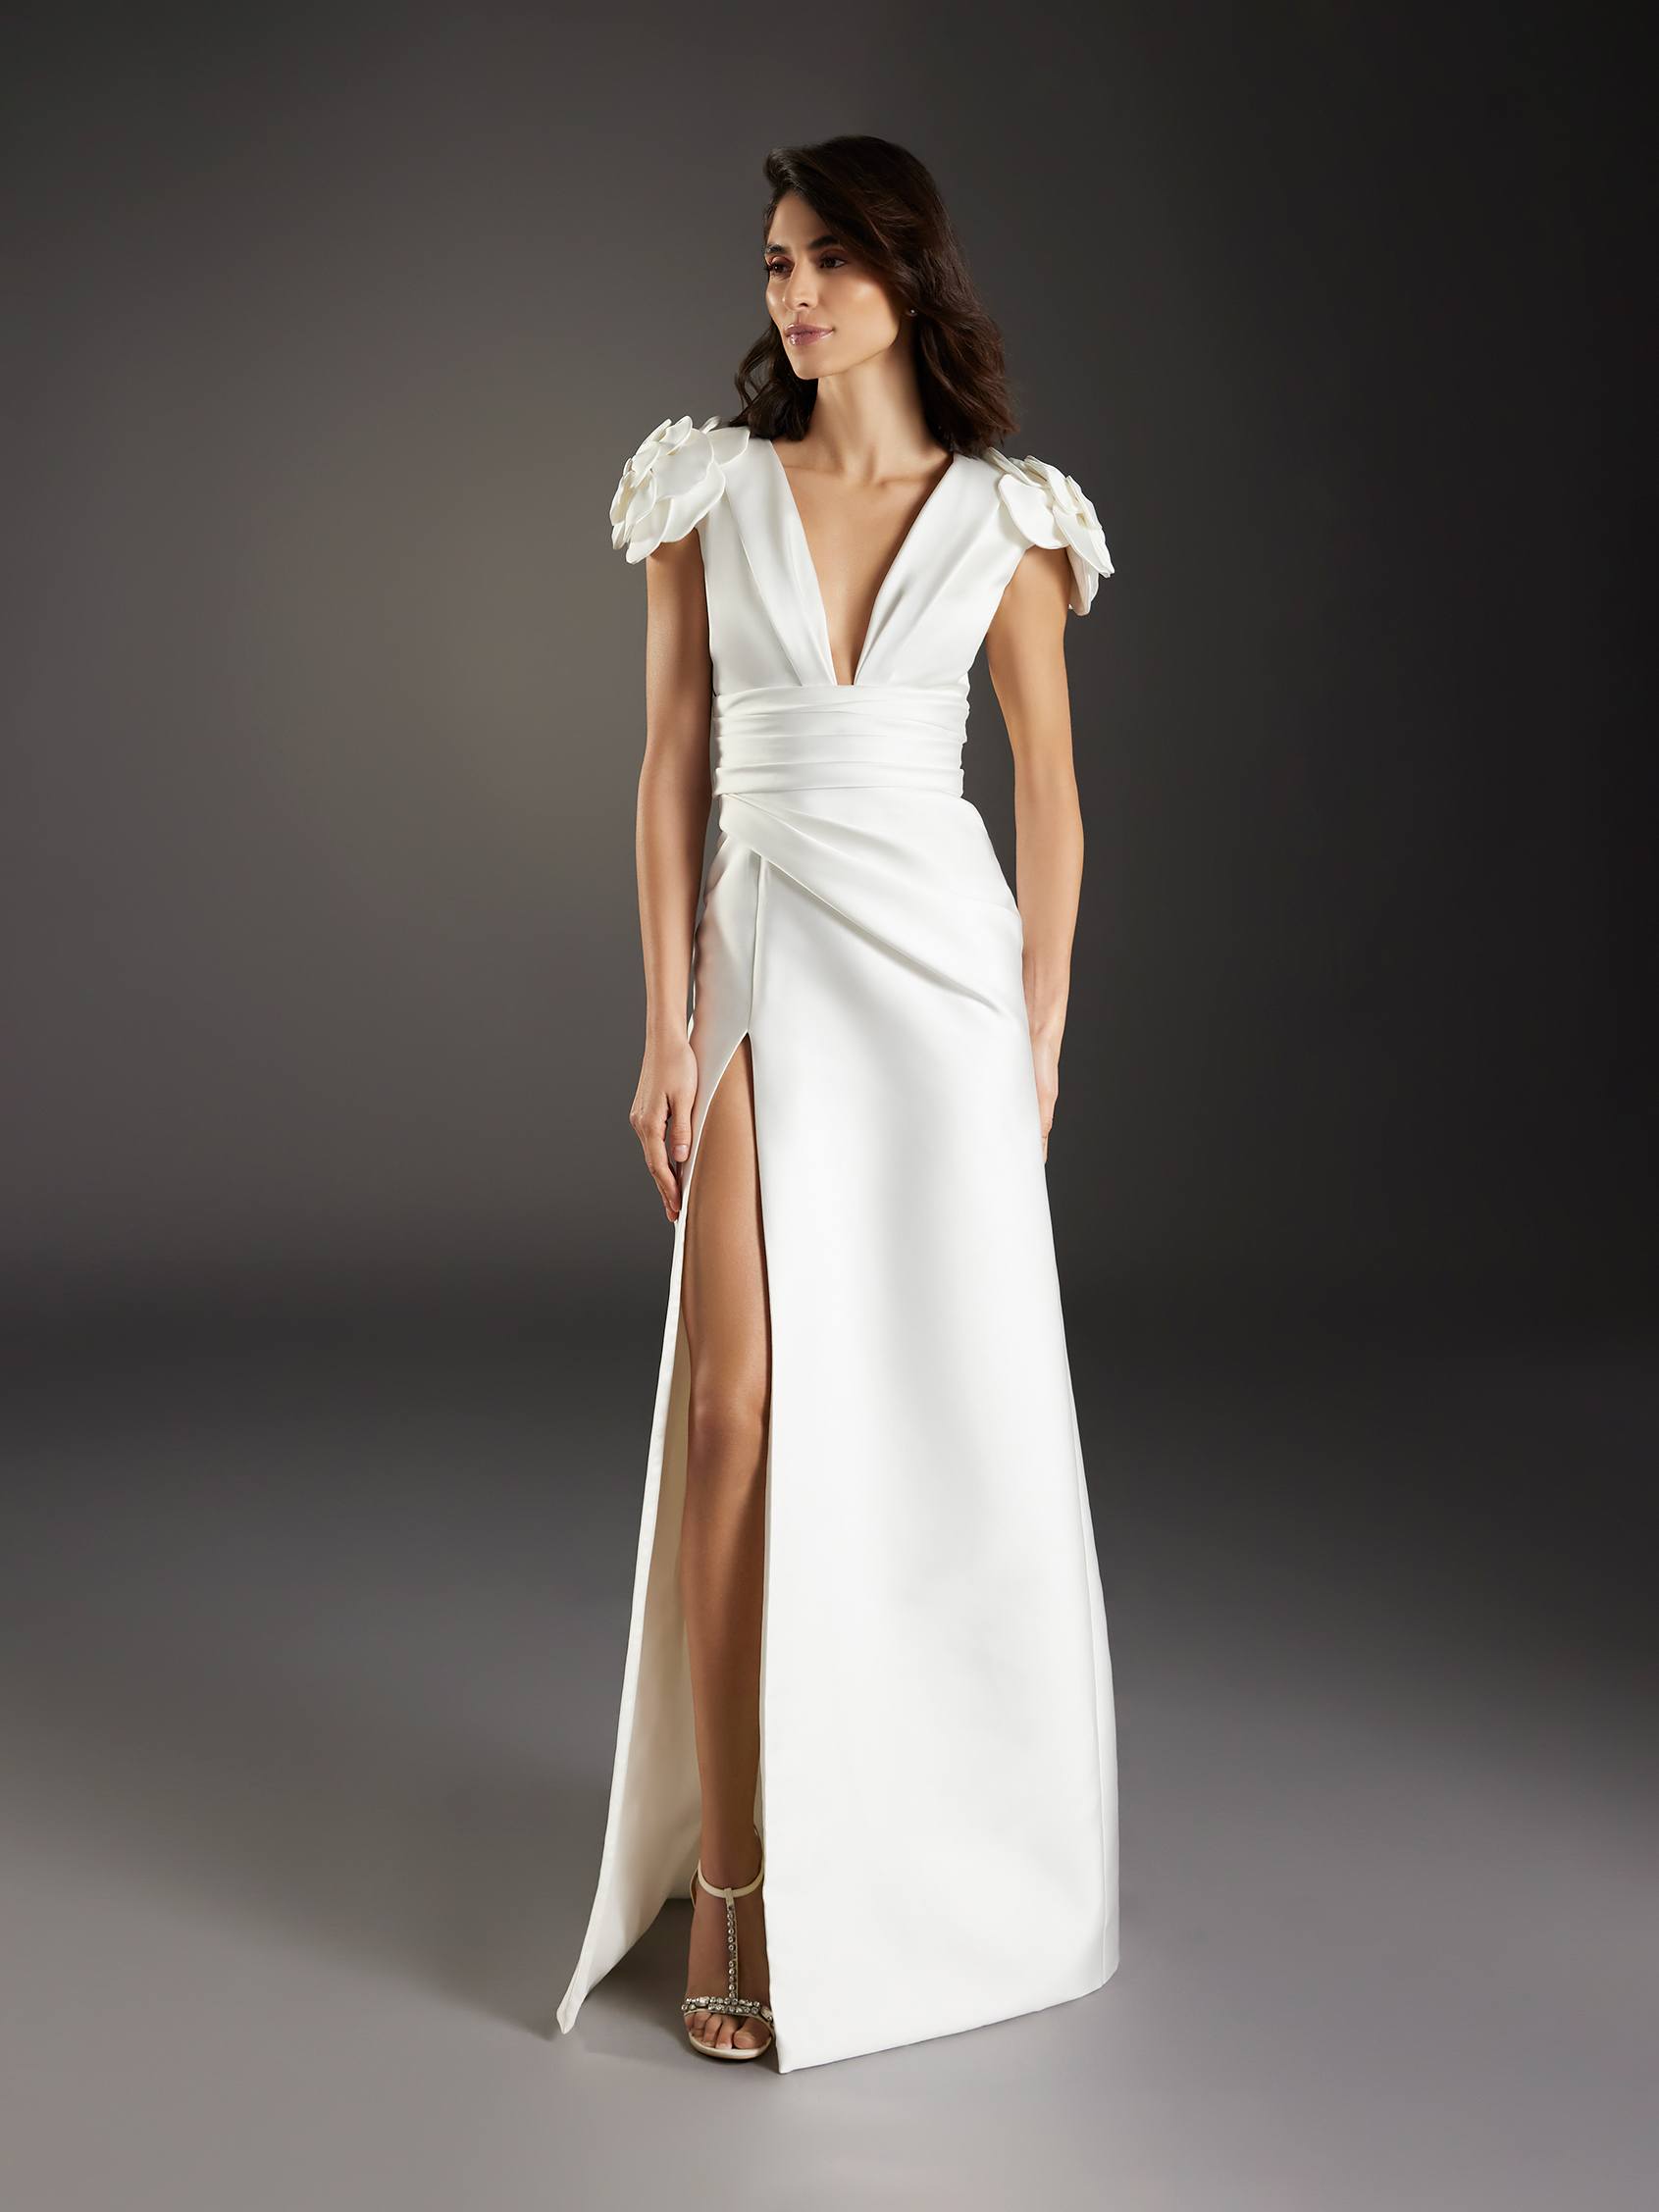 The Arianna Dress - White Runway Blog  Navy bridesmaid dresses, Perfect  bridesmaid dress, Online wedding dress